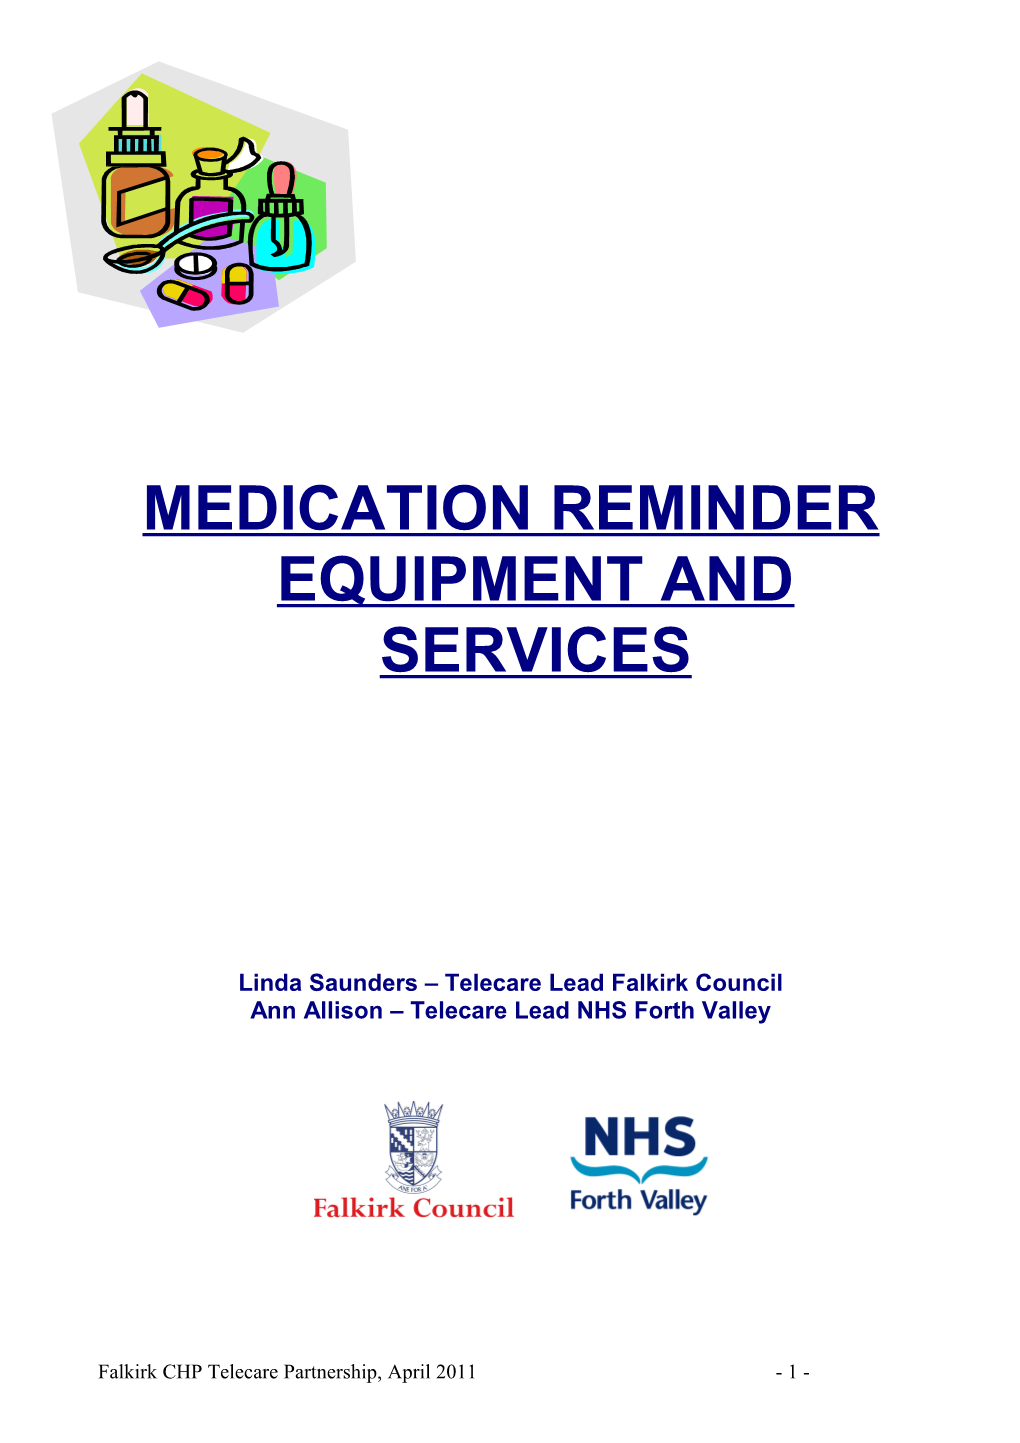 Medication Reminder Equipment/Services